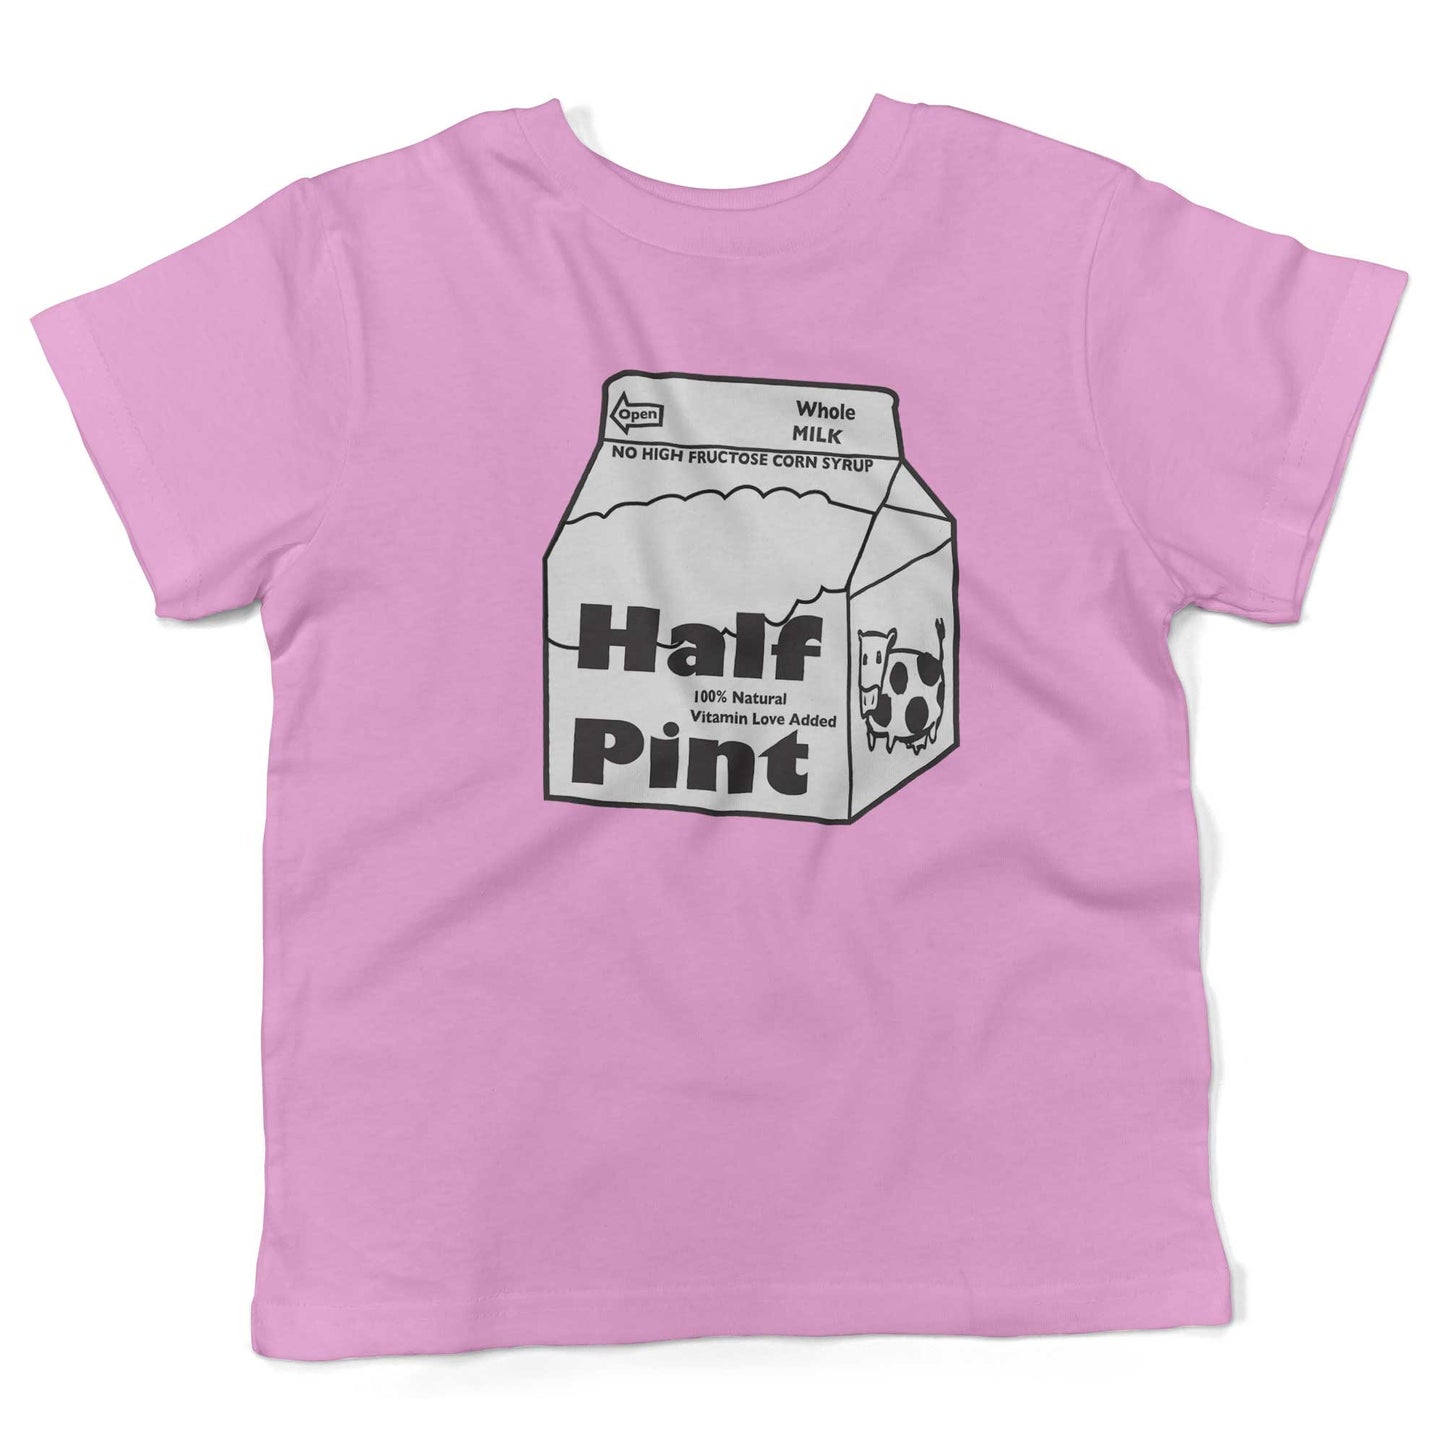 Half Pint Of Milk Toddler Shirt-Organic Pink-2T